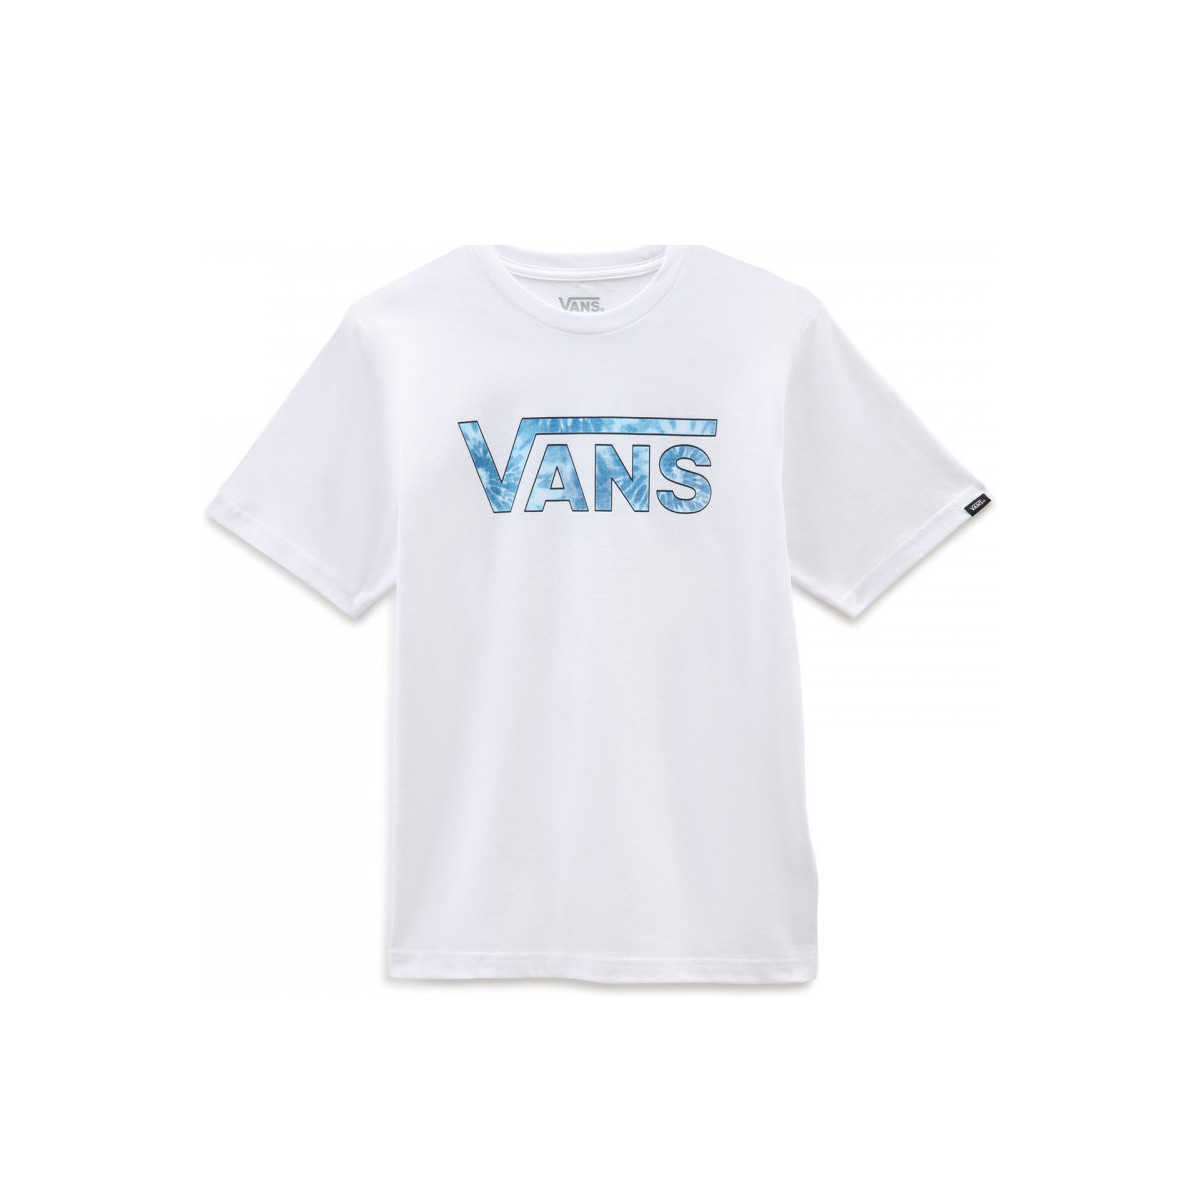 Kleidung Kinder T-Shirts & Poloshirts Vans classic logo Weiss